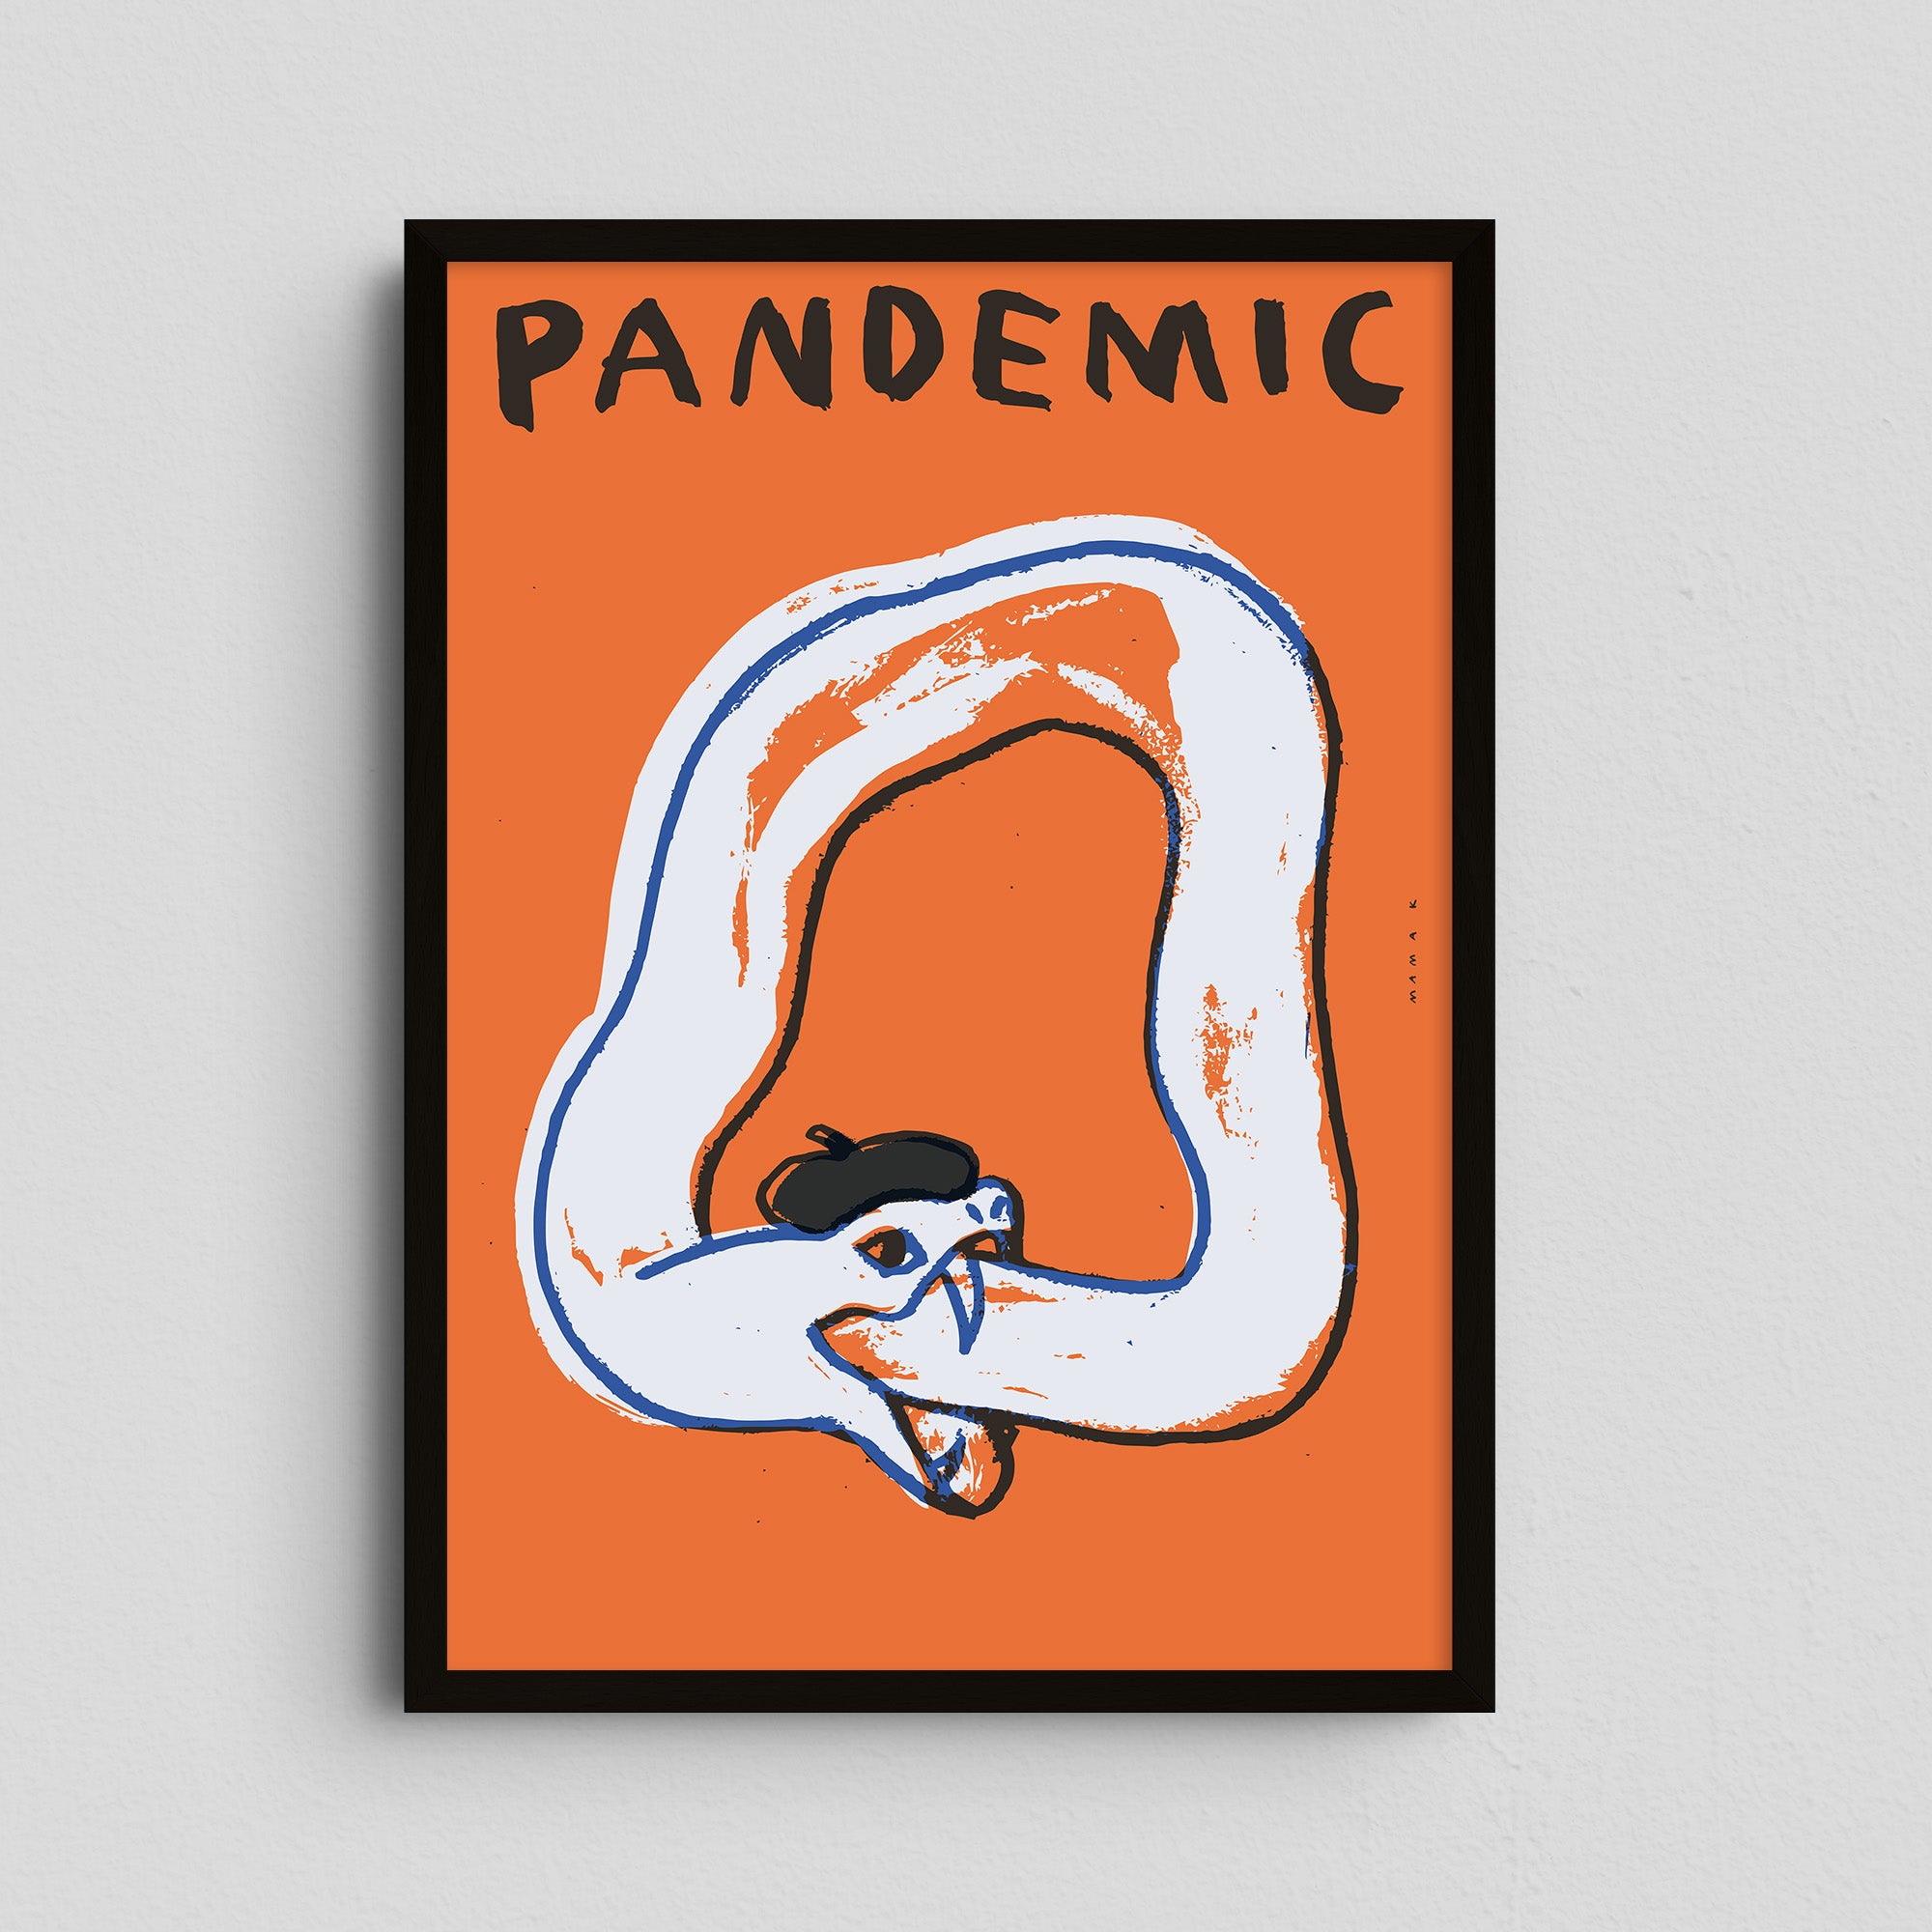 Art in Pandemic - Bartosz Mamak